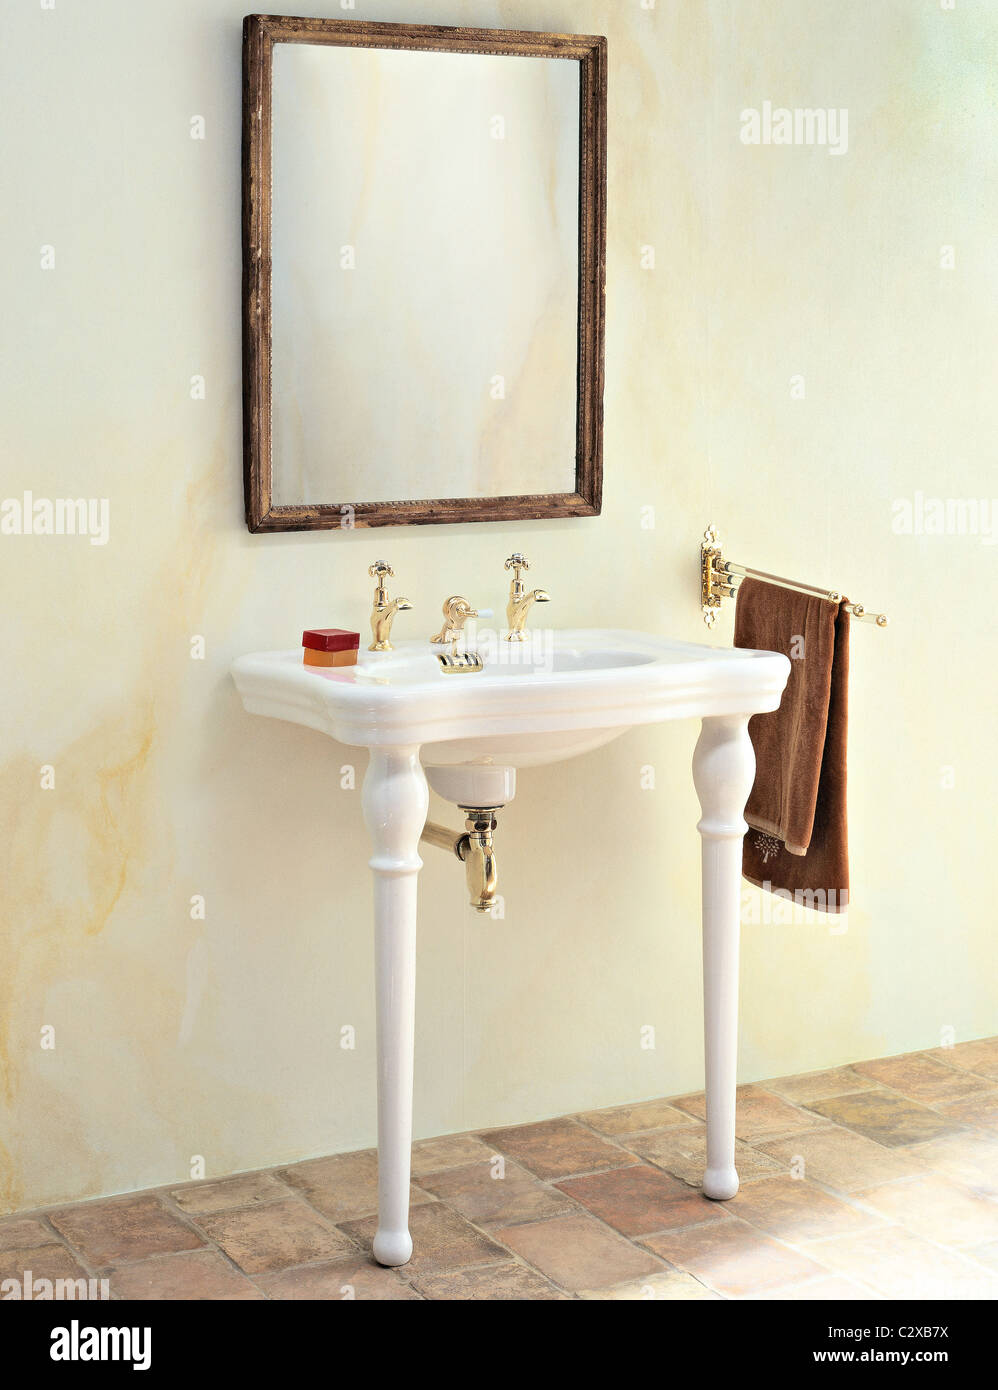 bathroom wash basin mirror Stock Photo - Alamy